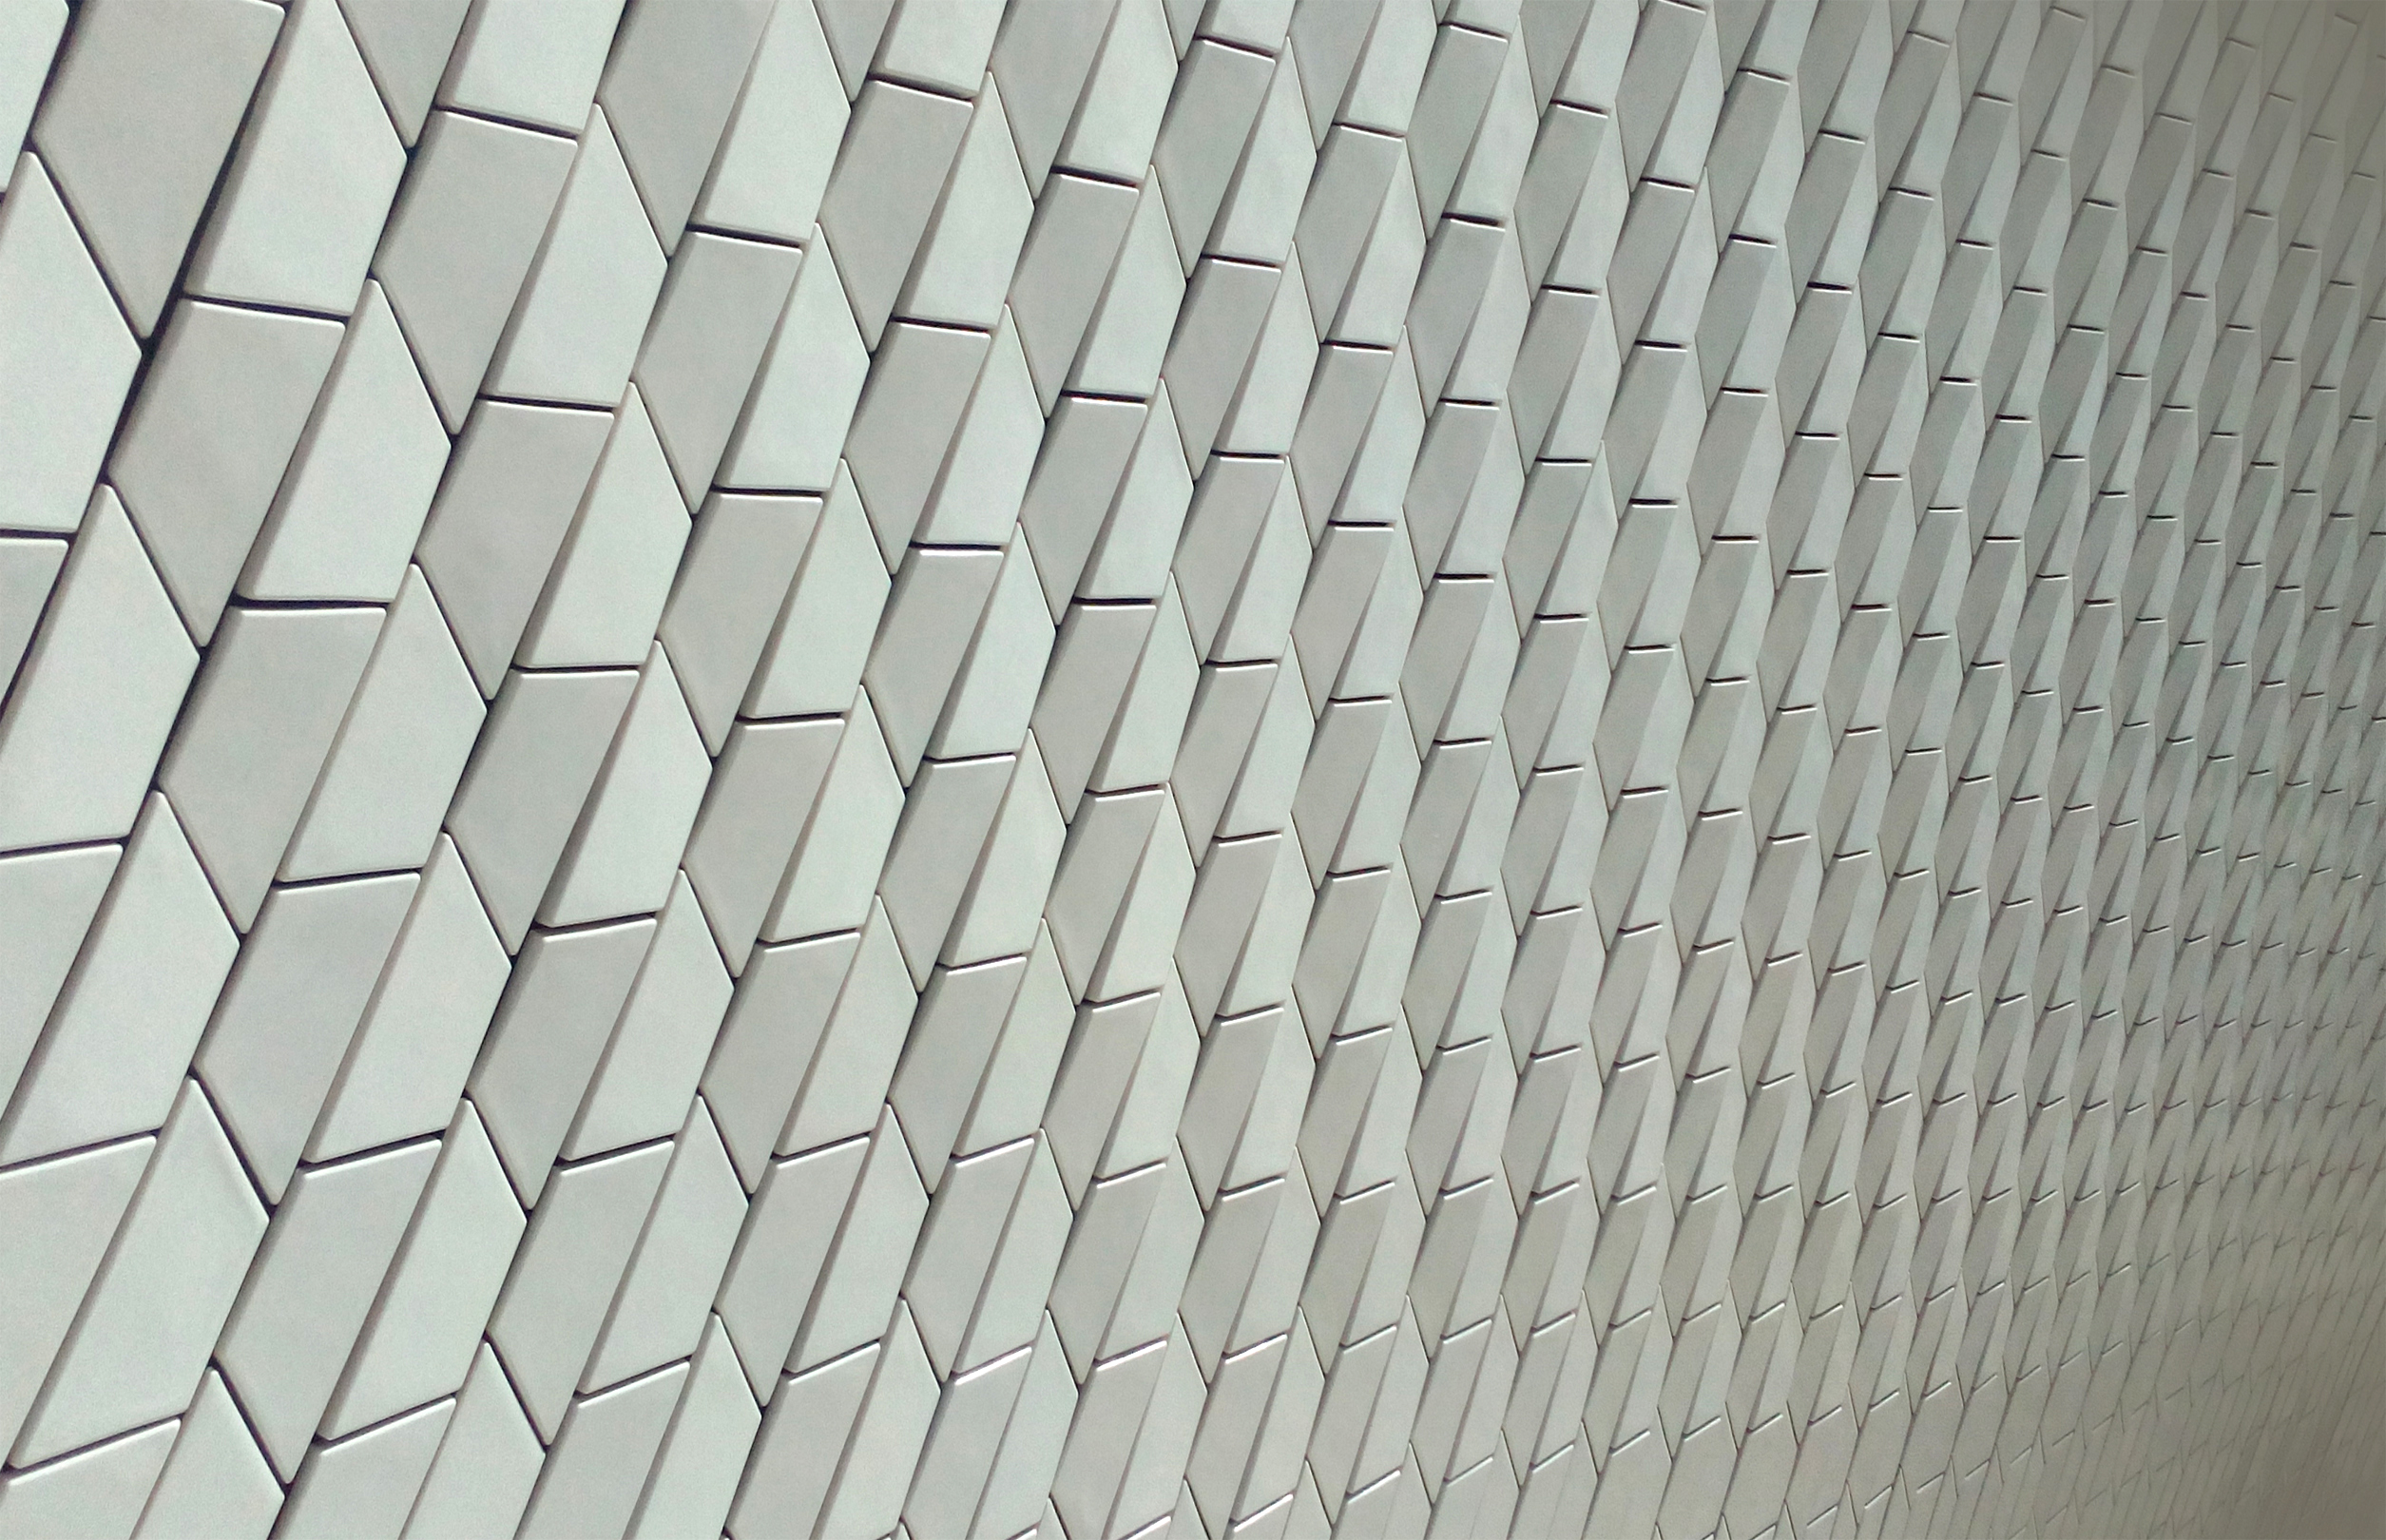 Architectural ceramic tiles - modern materials - maat museum - lisbon photo